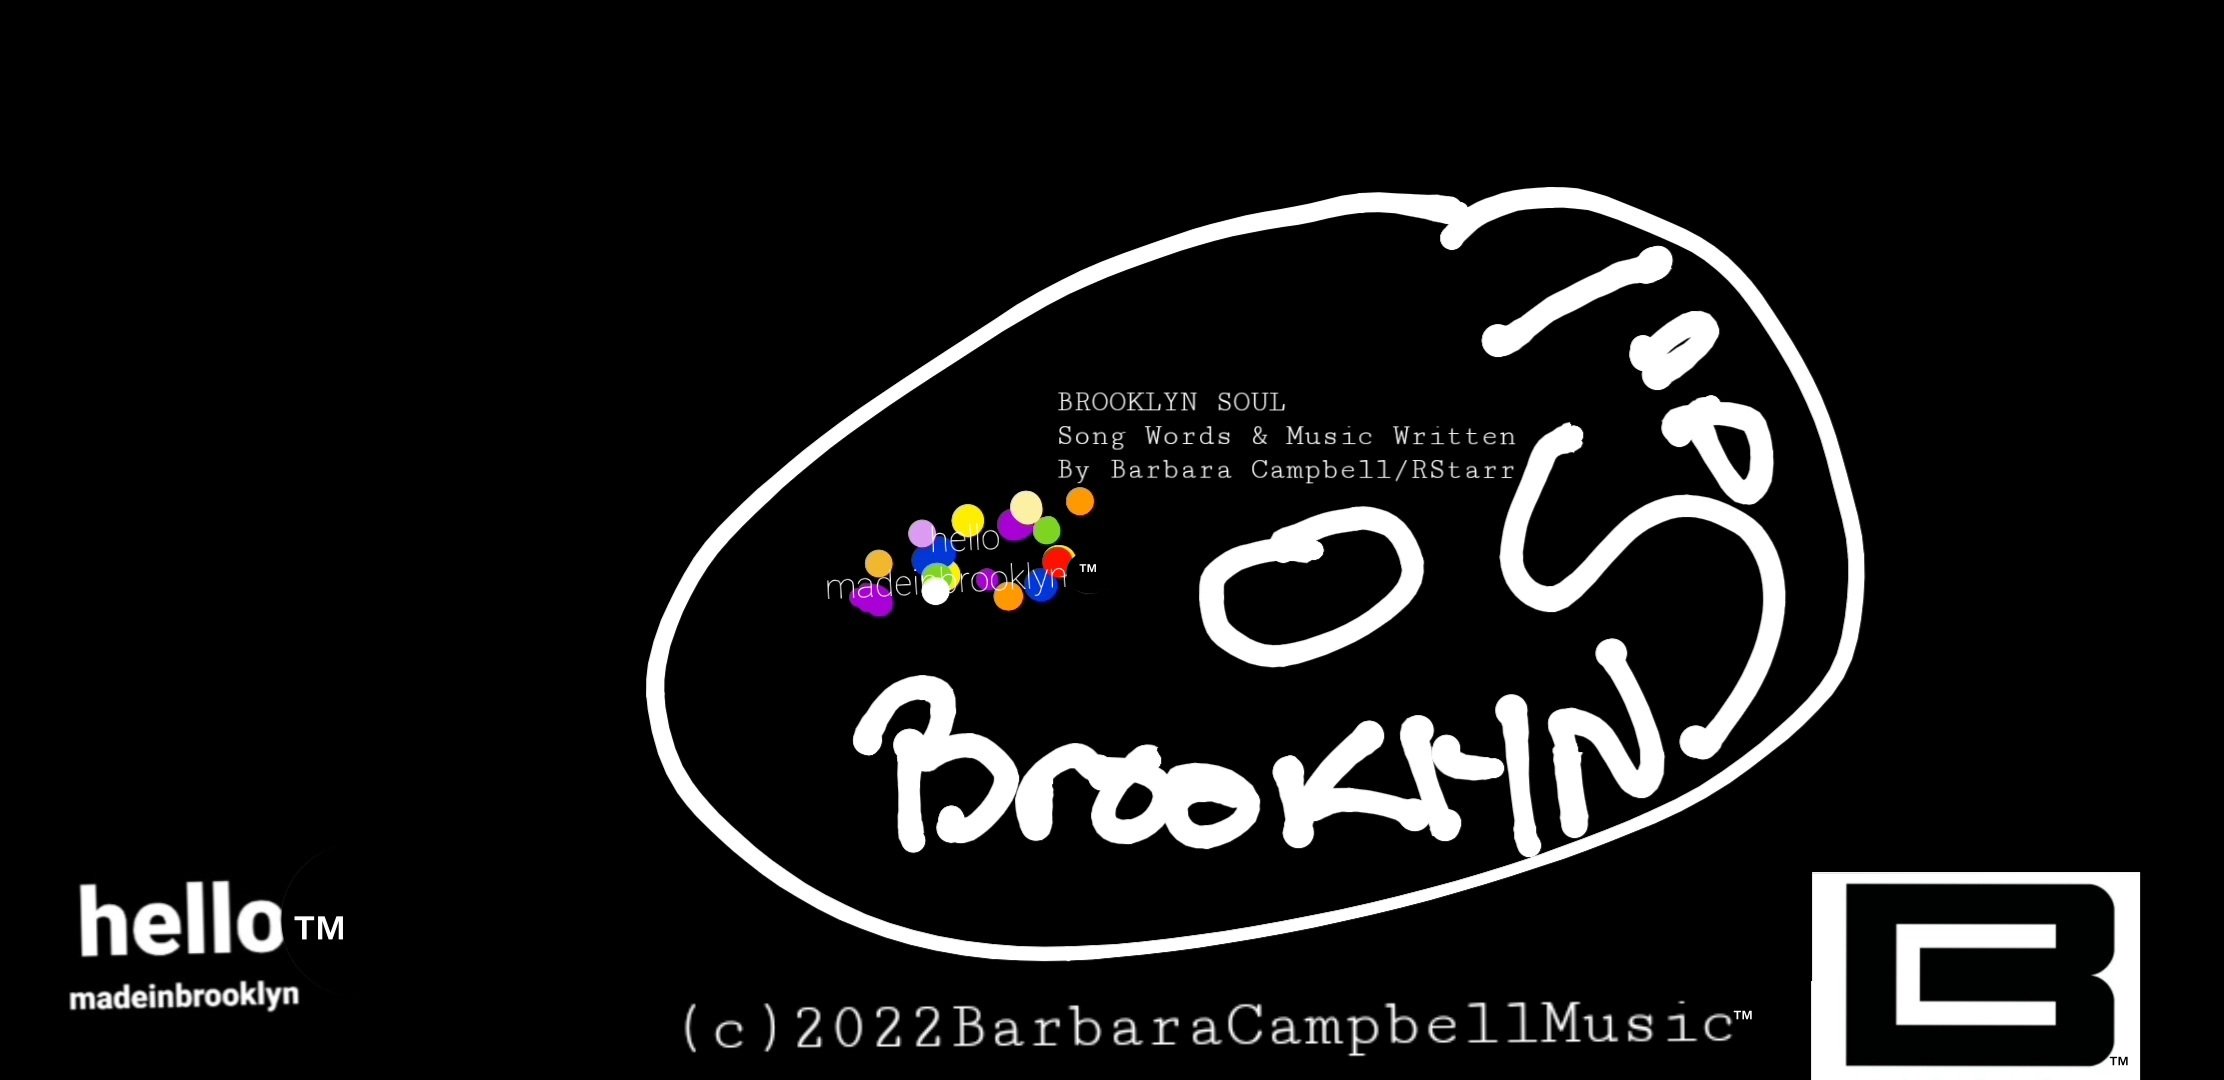 Barbara Campbell Music™ BC™ Music  2022.jpg